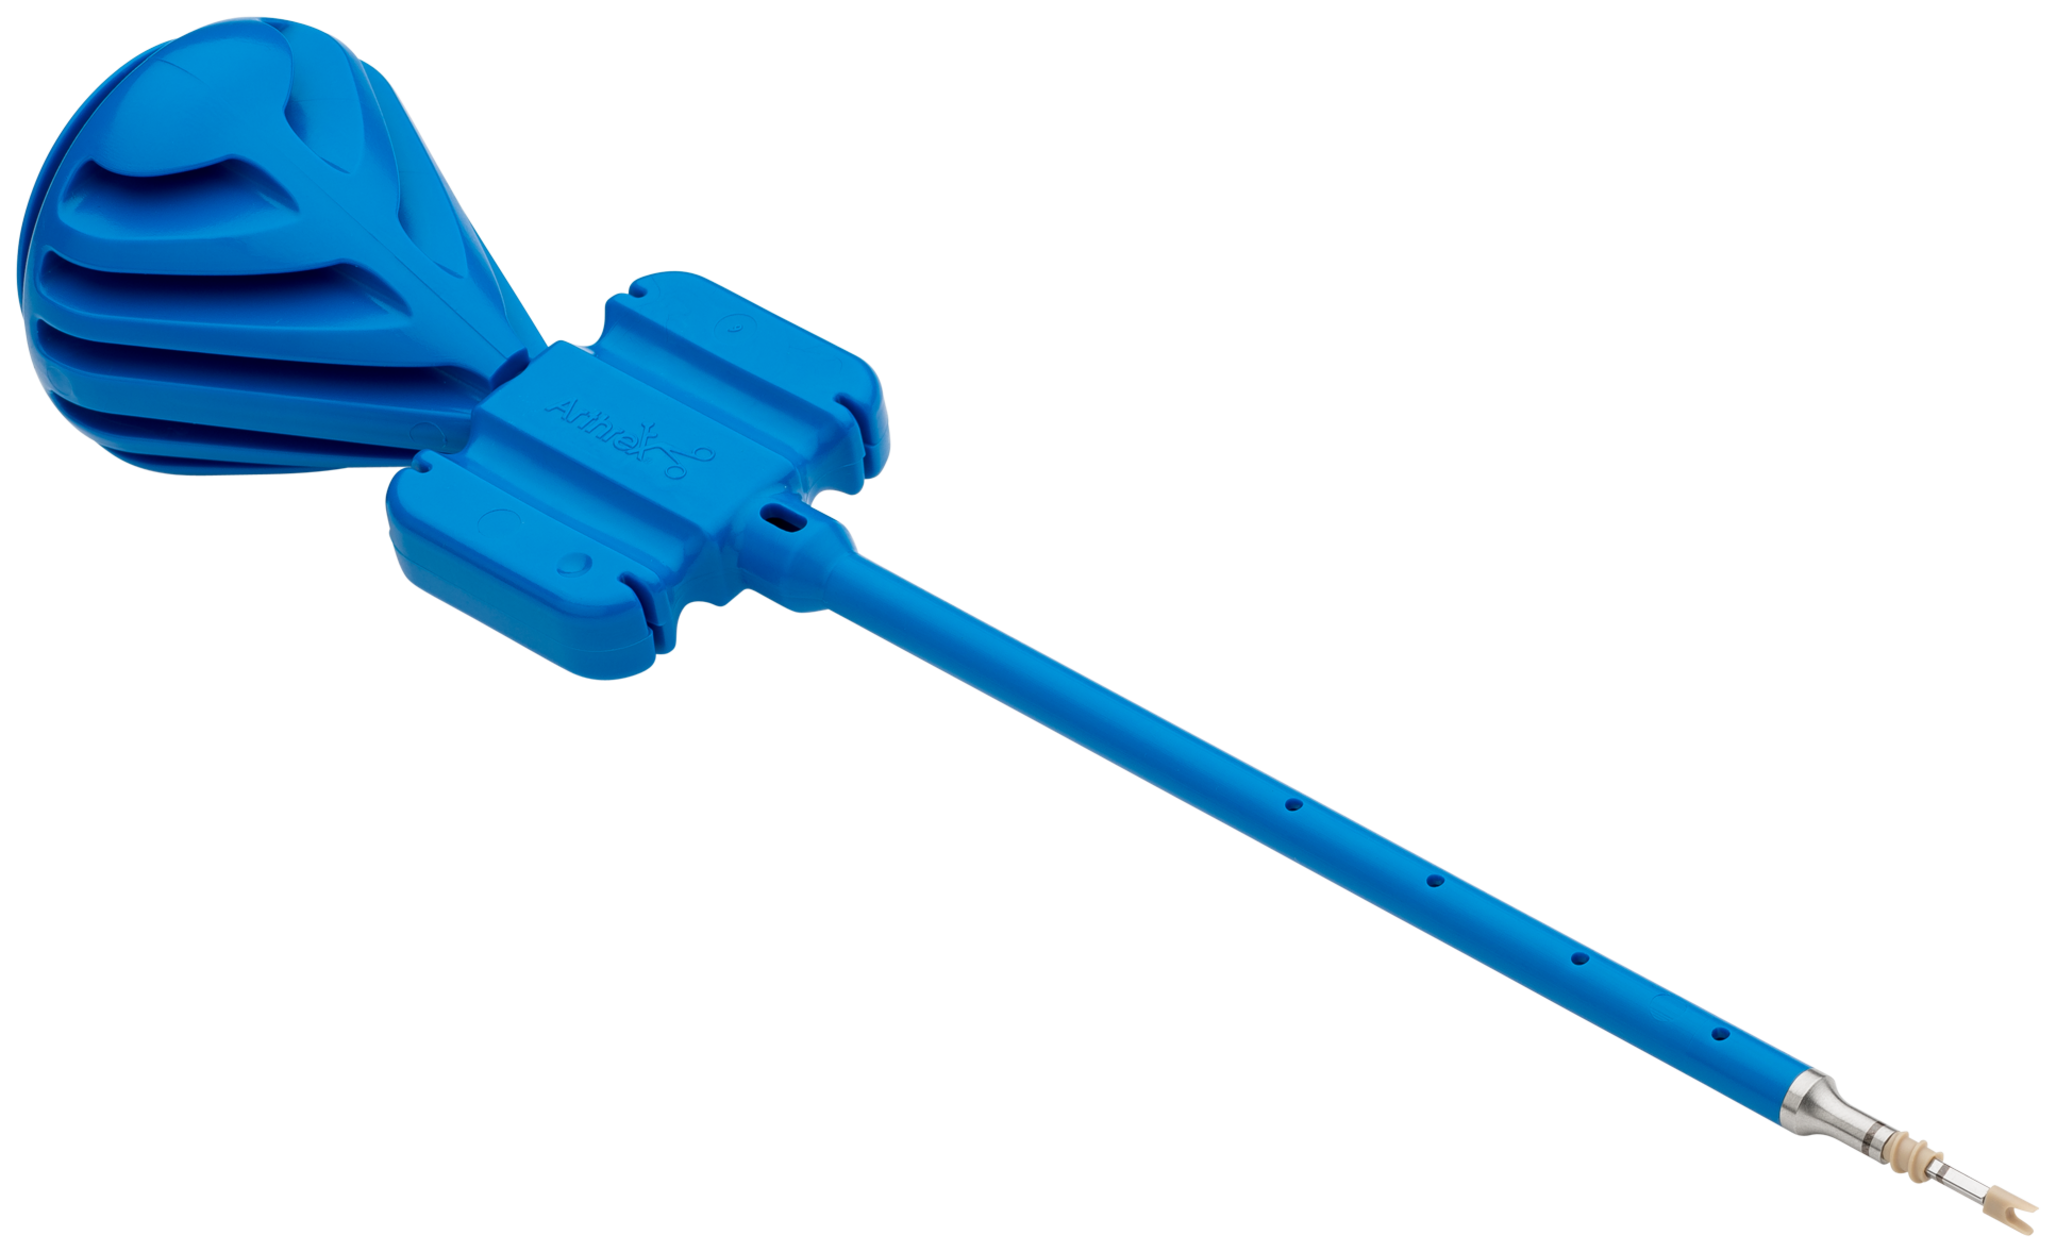 New ARTHREX AR-8988-CP FiberLock Suspension Implant Kit (Exp 2027)  Disposables - General For Sale - DOTmed Listing #4511727